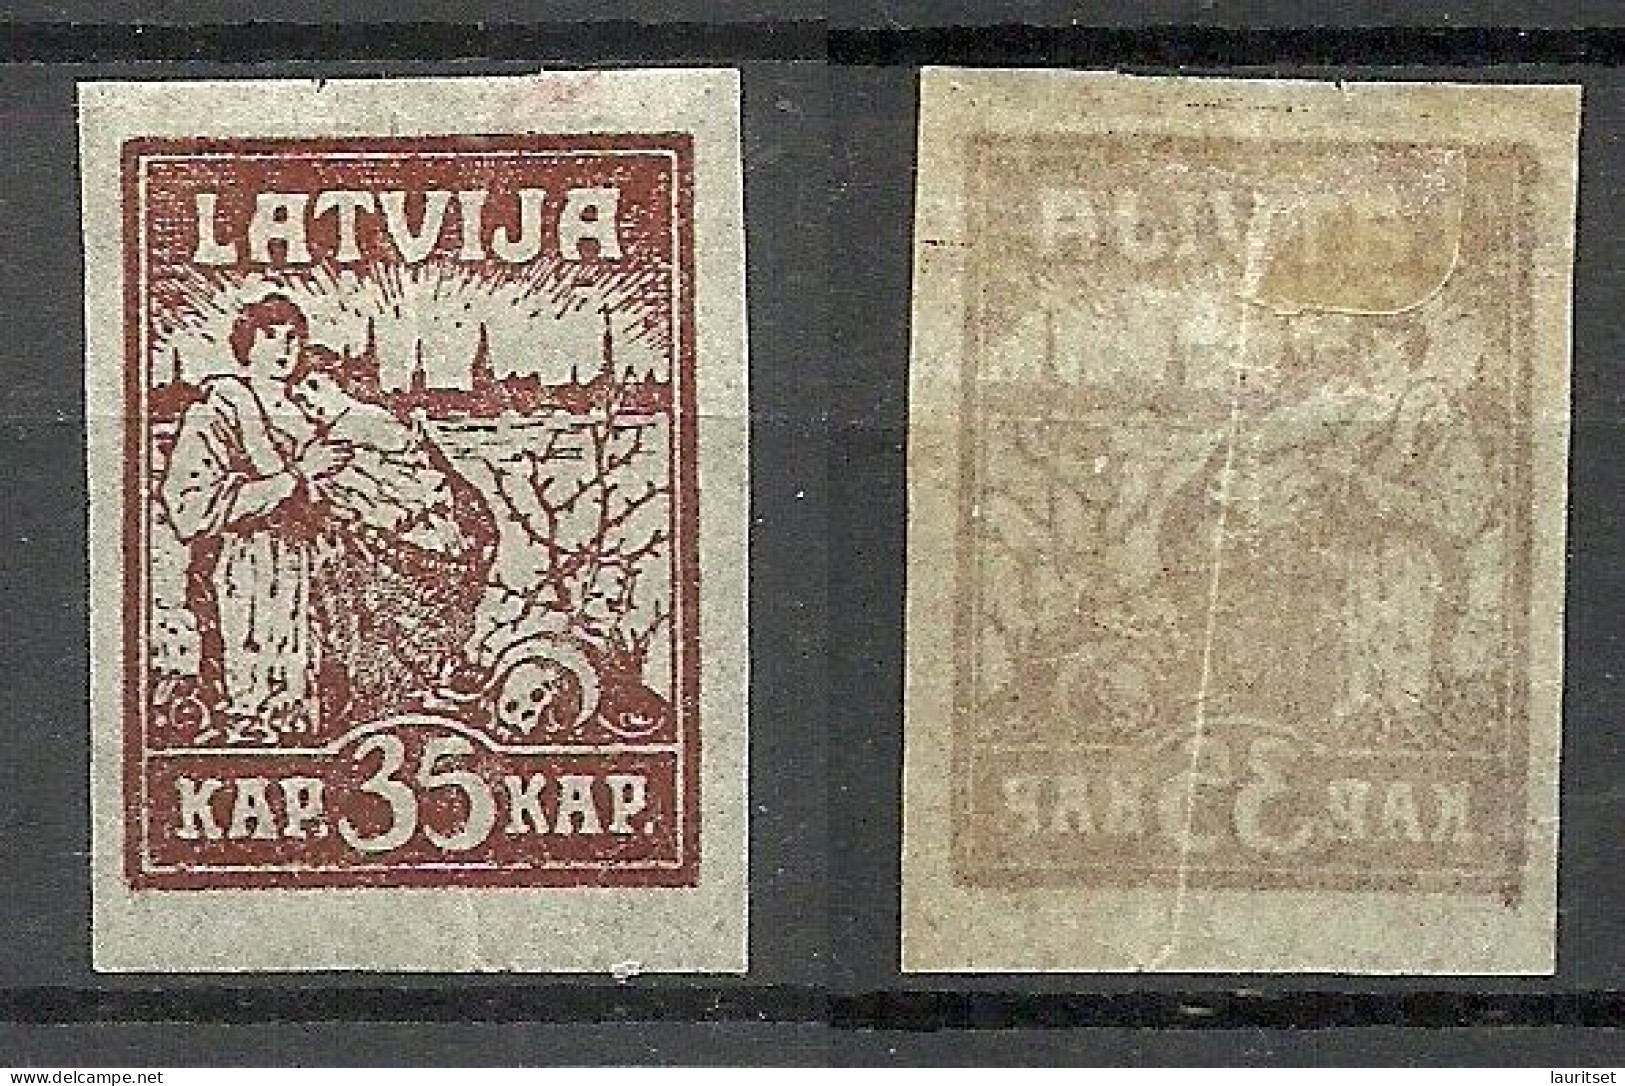 LETTLAND Latvia 1919 Michel 27 Y Zigarettenpapier Pelure Paper * NB! Light Vertical Fold Mark! - Letonia